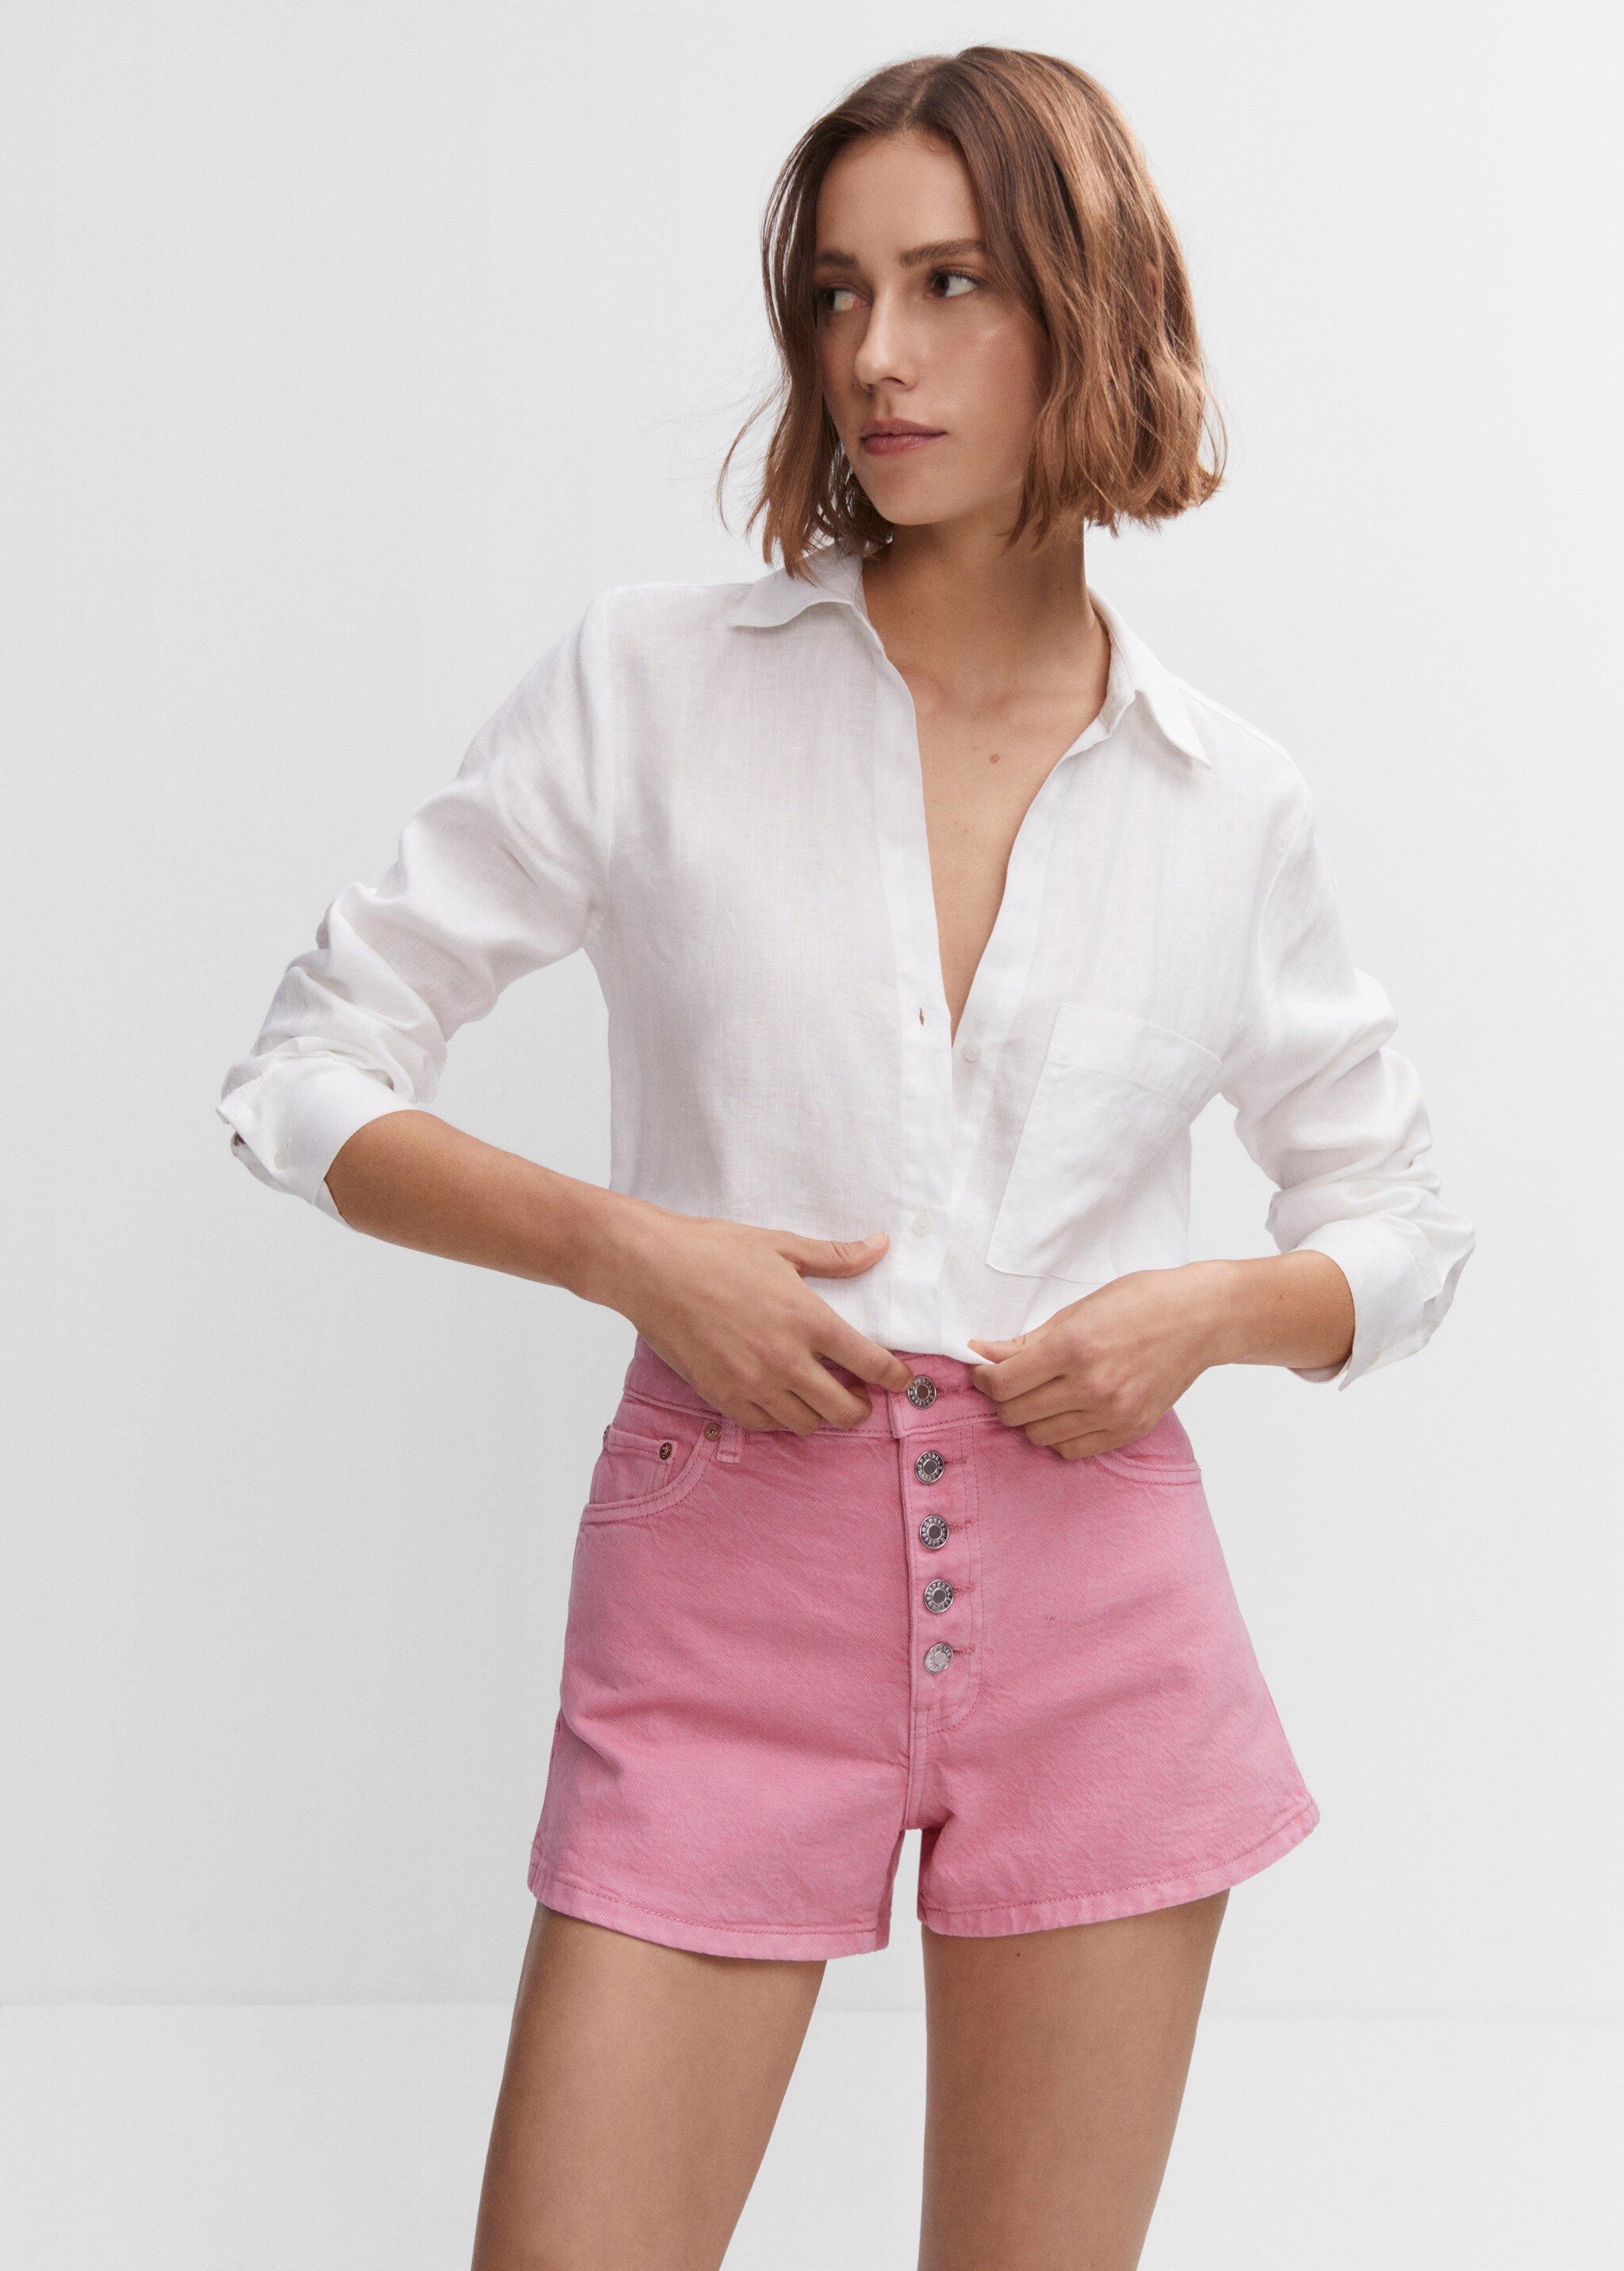 Denim shorts with buttons - Medium plane